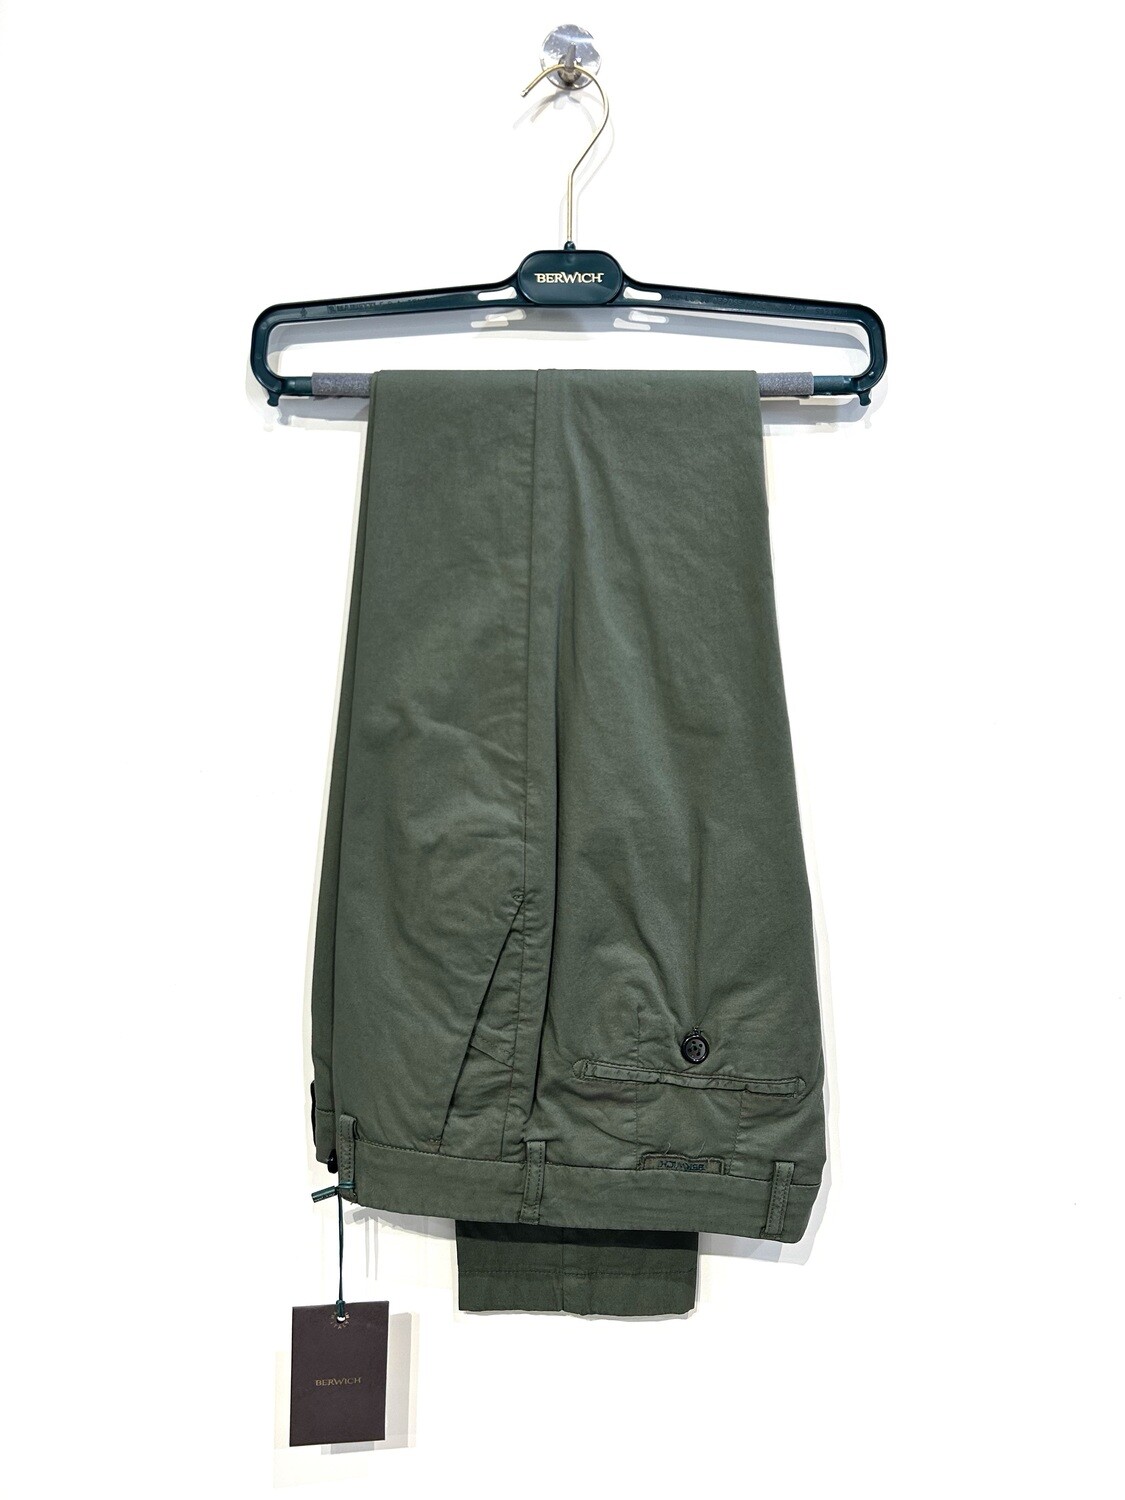 Pantalone gabardina elasticizzata lavata. Col. Militare